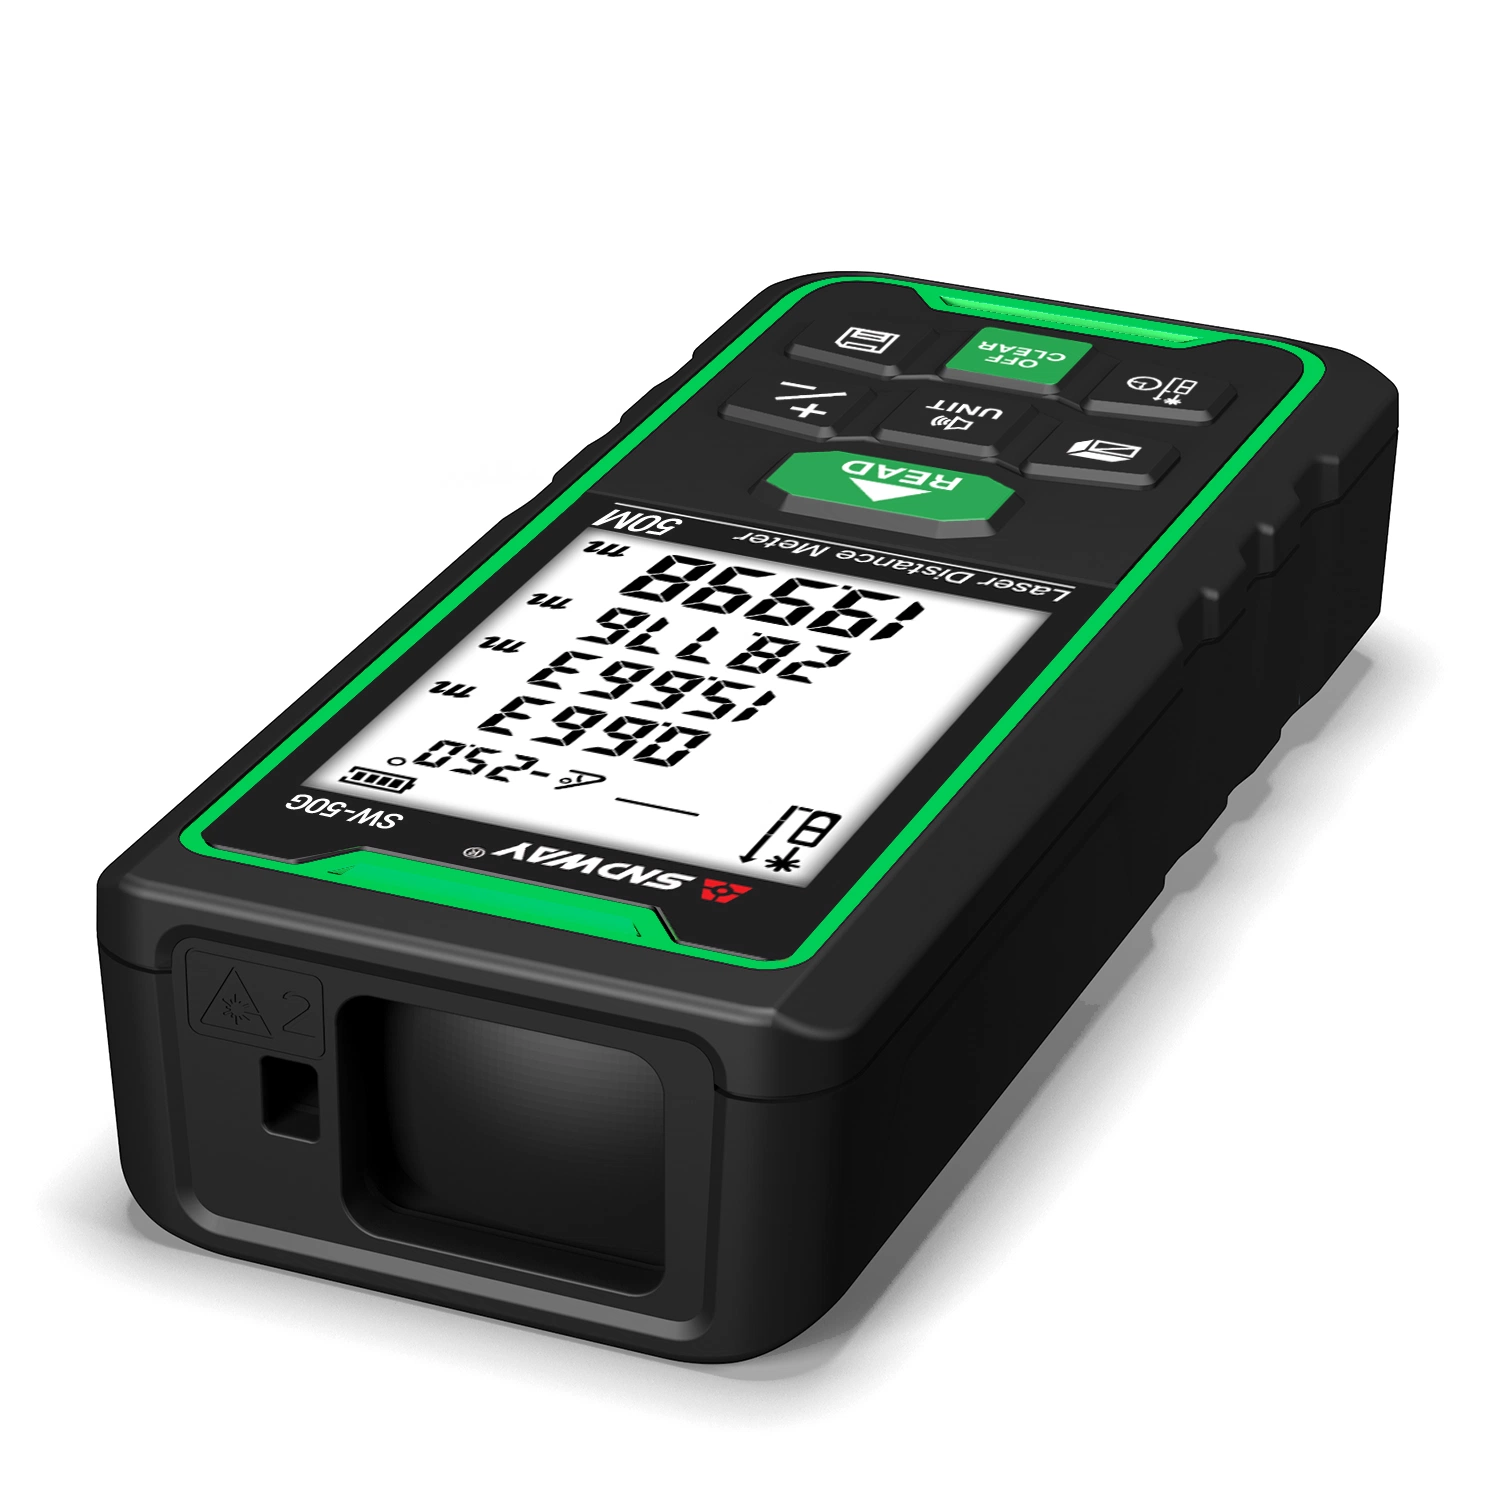 Sndway Green Beam Laser Rangefinder Measuring 50m Digital Tape Measure Range Finder High Accurate Roulette Laser Distance Meter